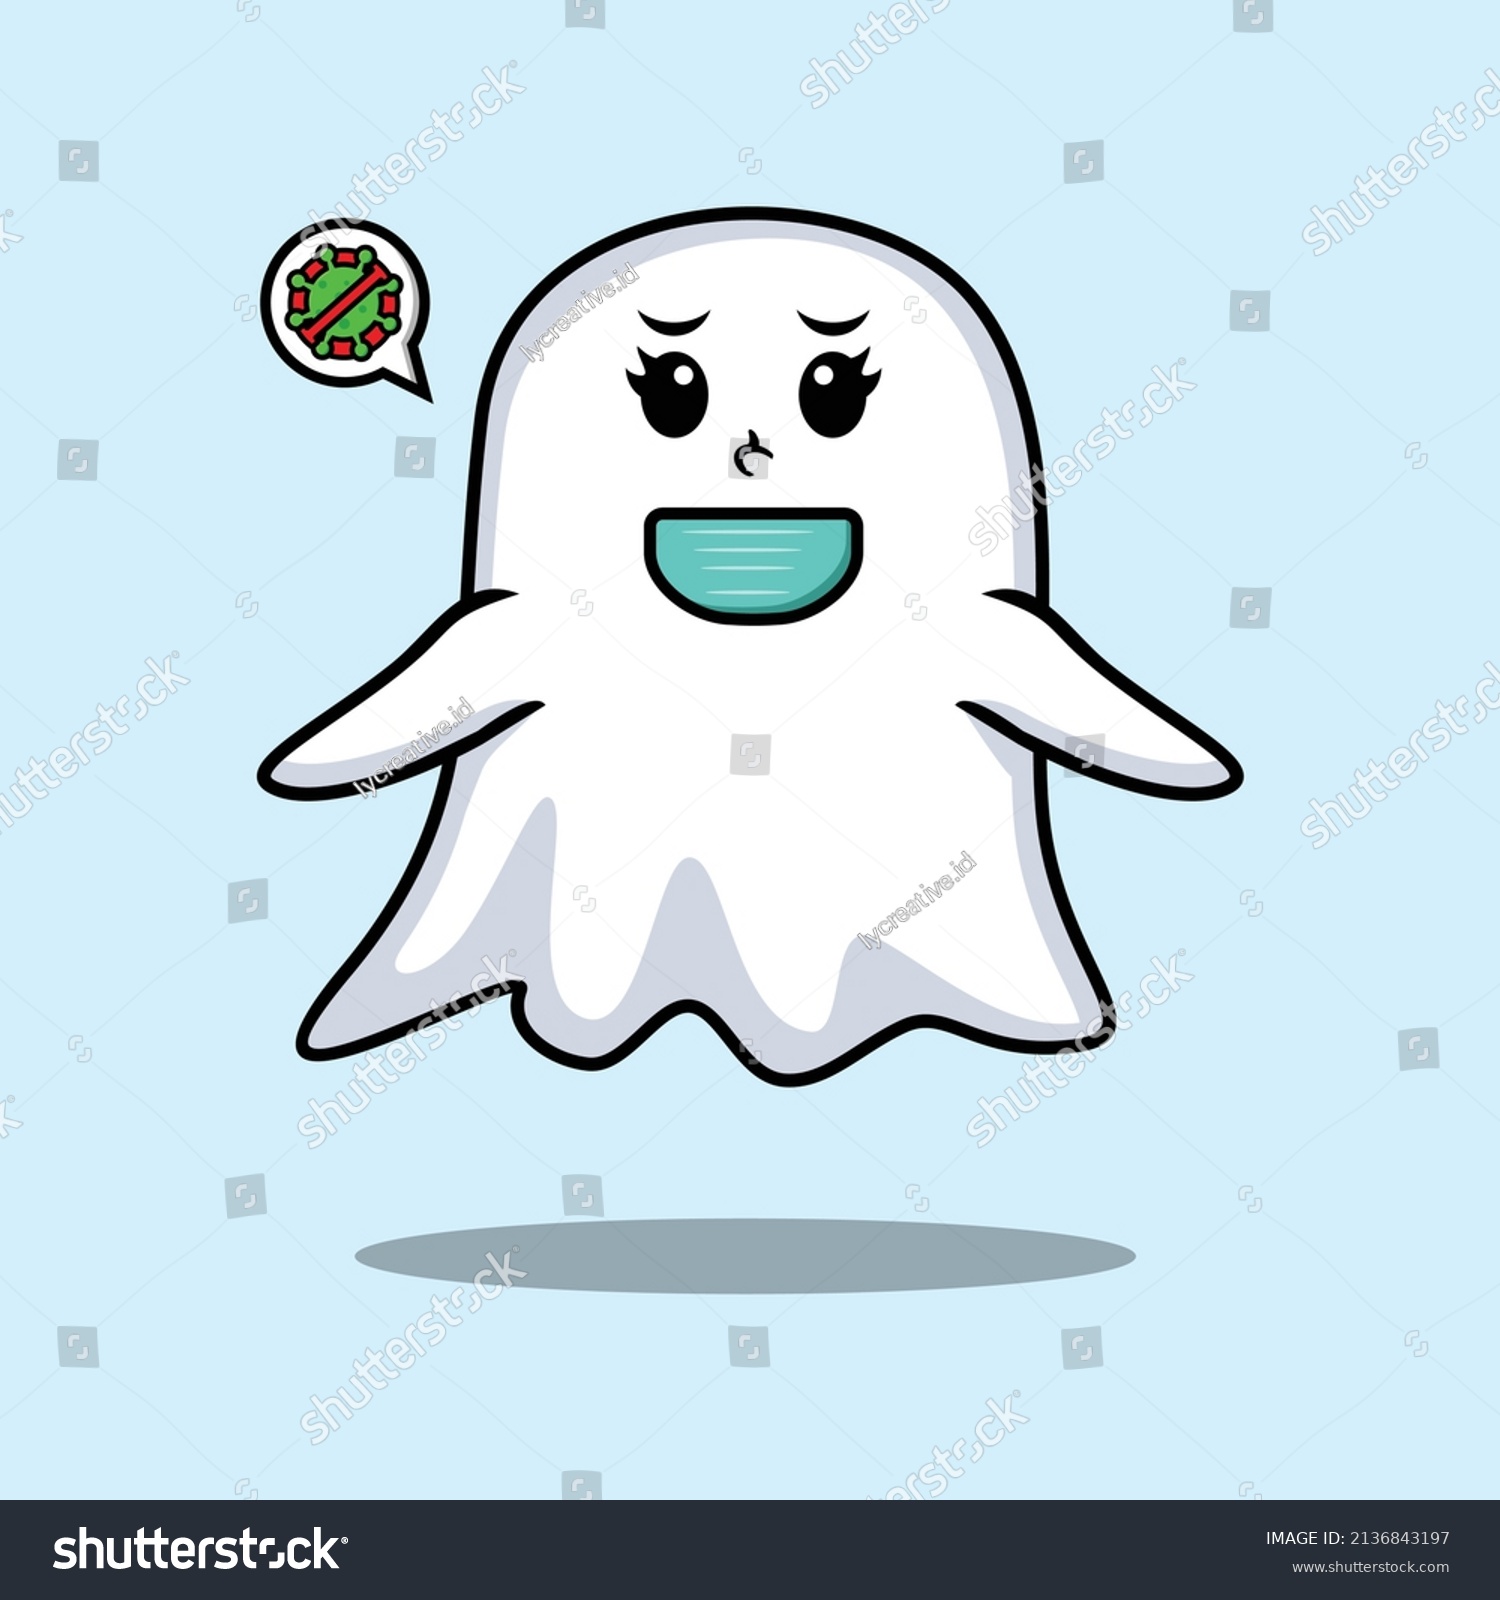 Cute Cartoon Mascot Illustration Ghost Using Stock Vector (Royalty Free ...